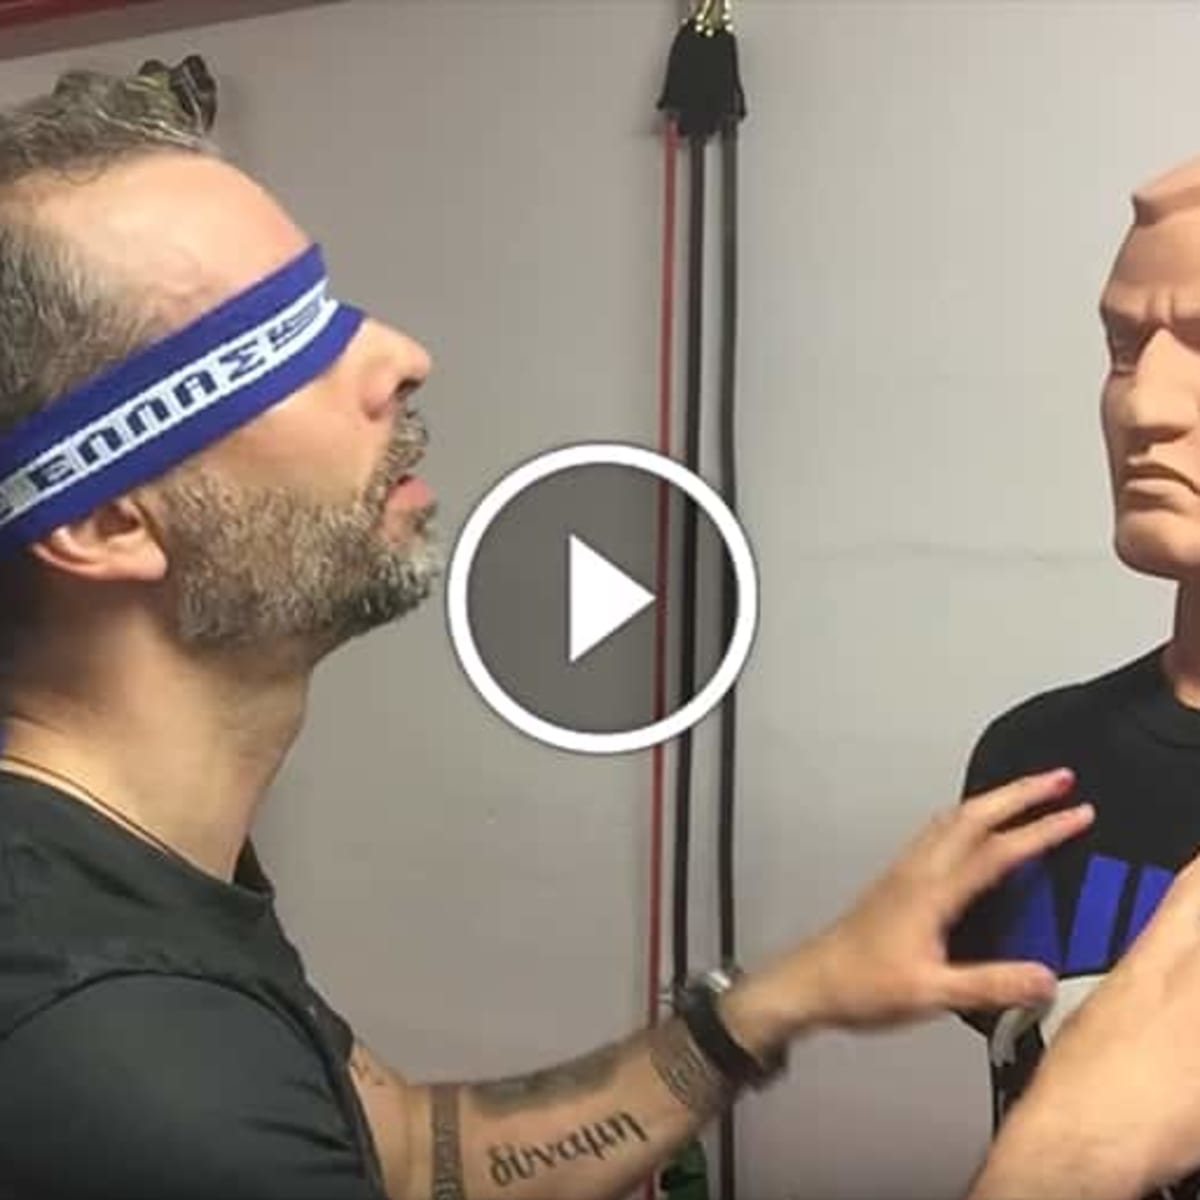 Blindfolded martial arts master slams SLEDGEHAMMER into